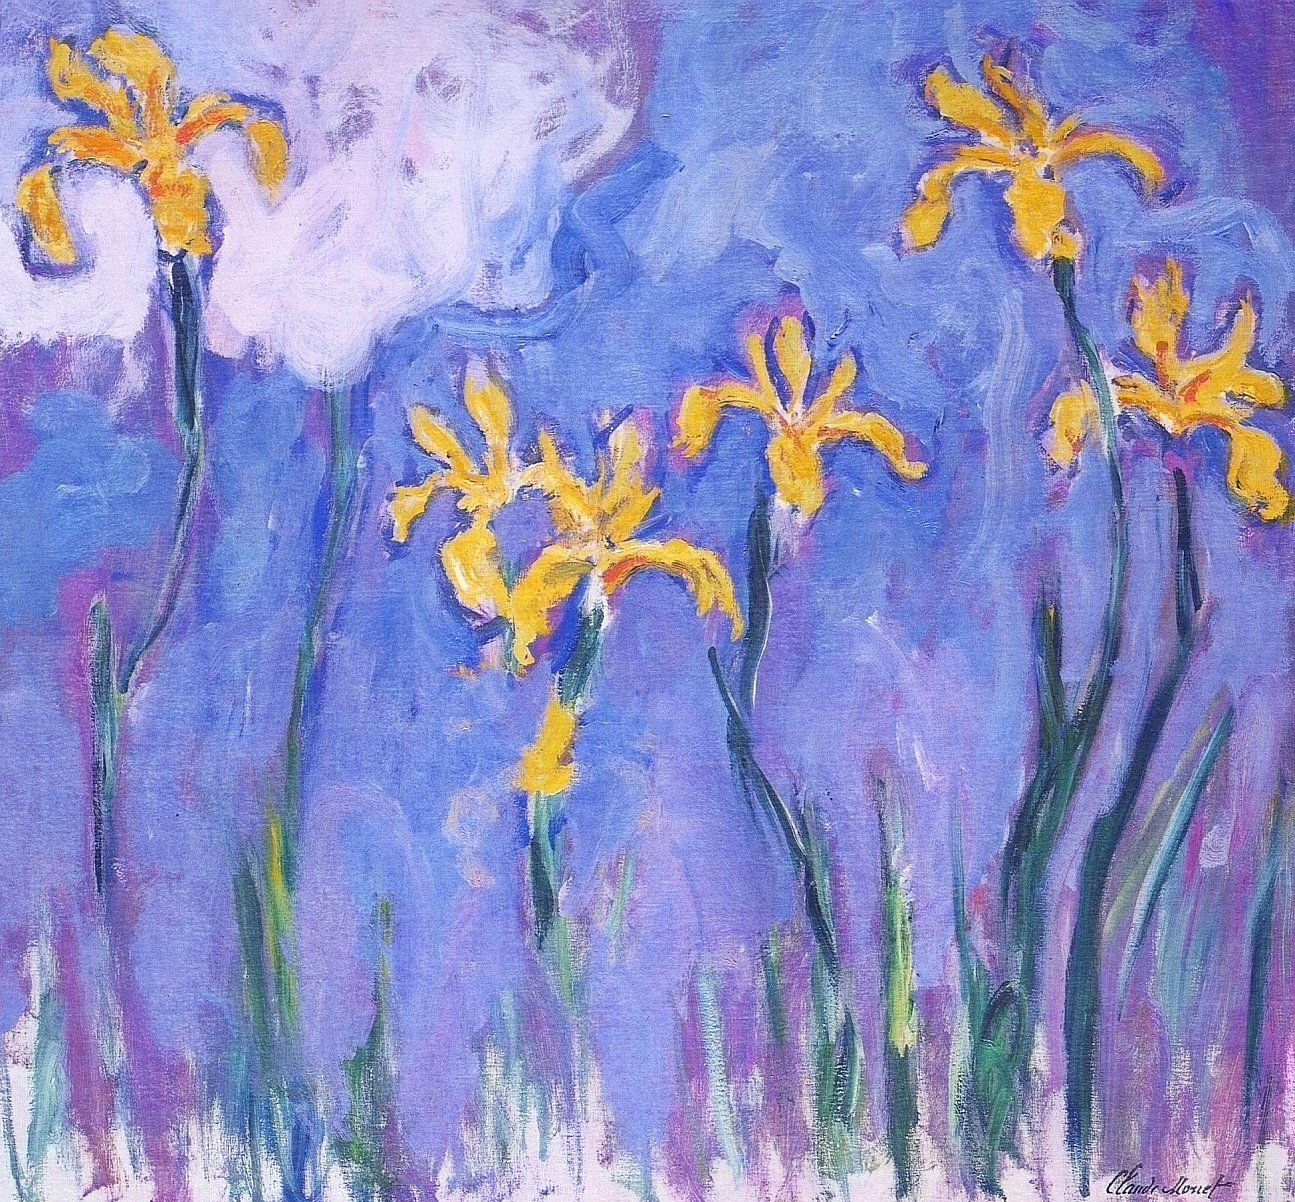 Claude+Monet-1840-1926 (909).jpg